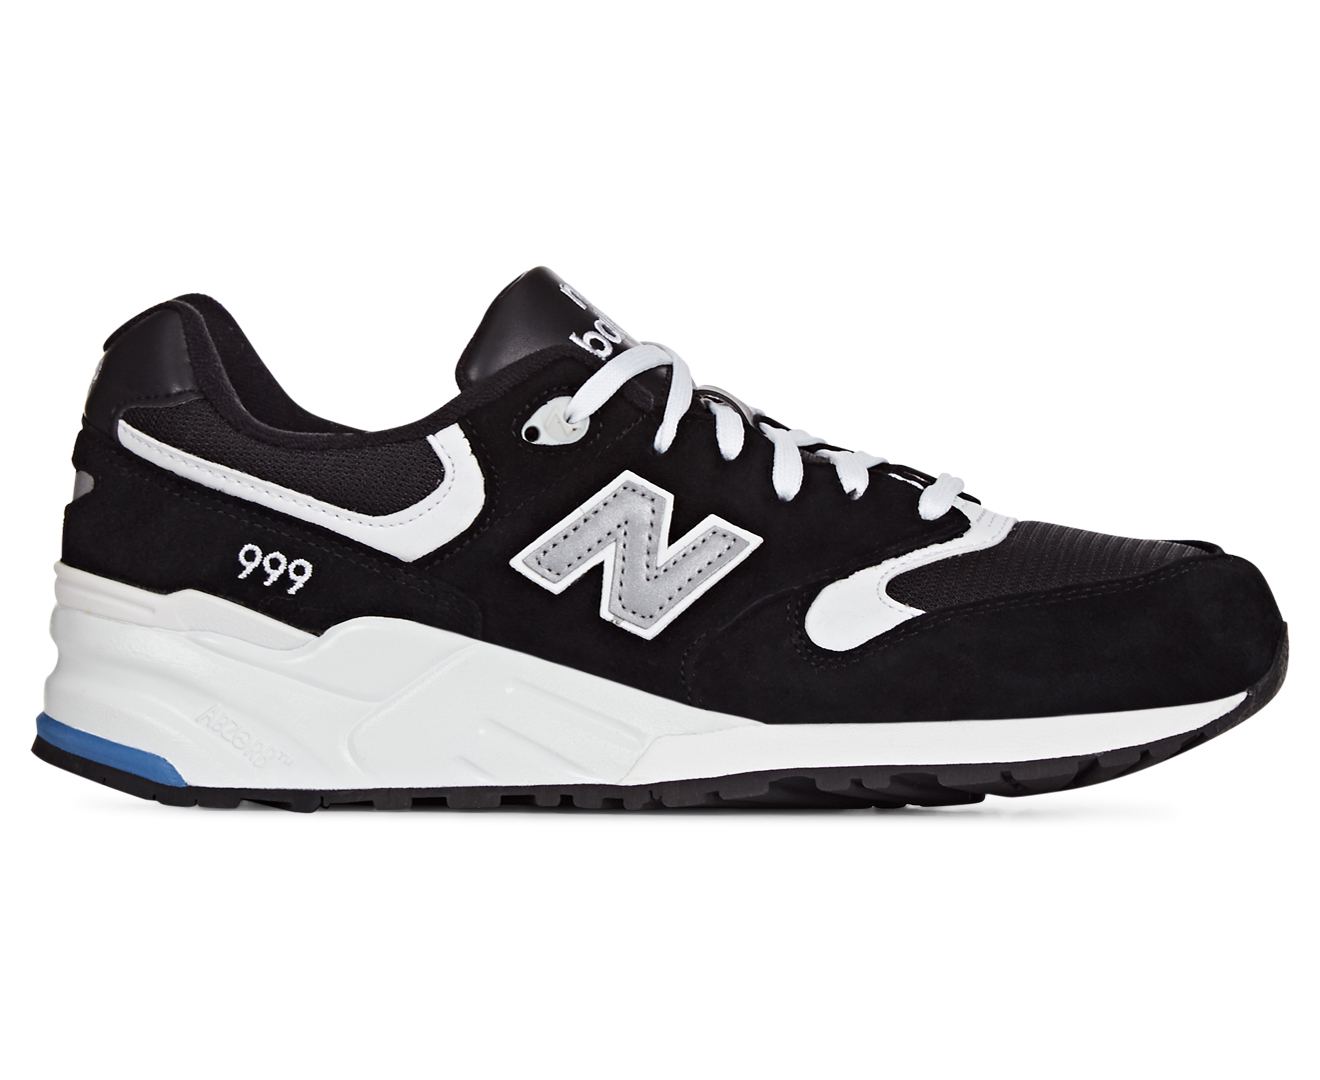 New Balance Men's 999 Sneaker - Black/White | Catch.com.au